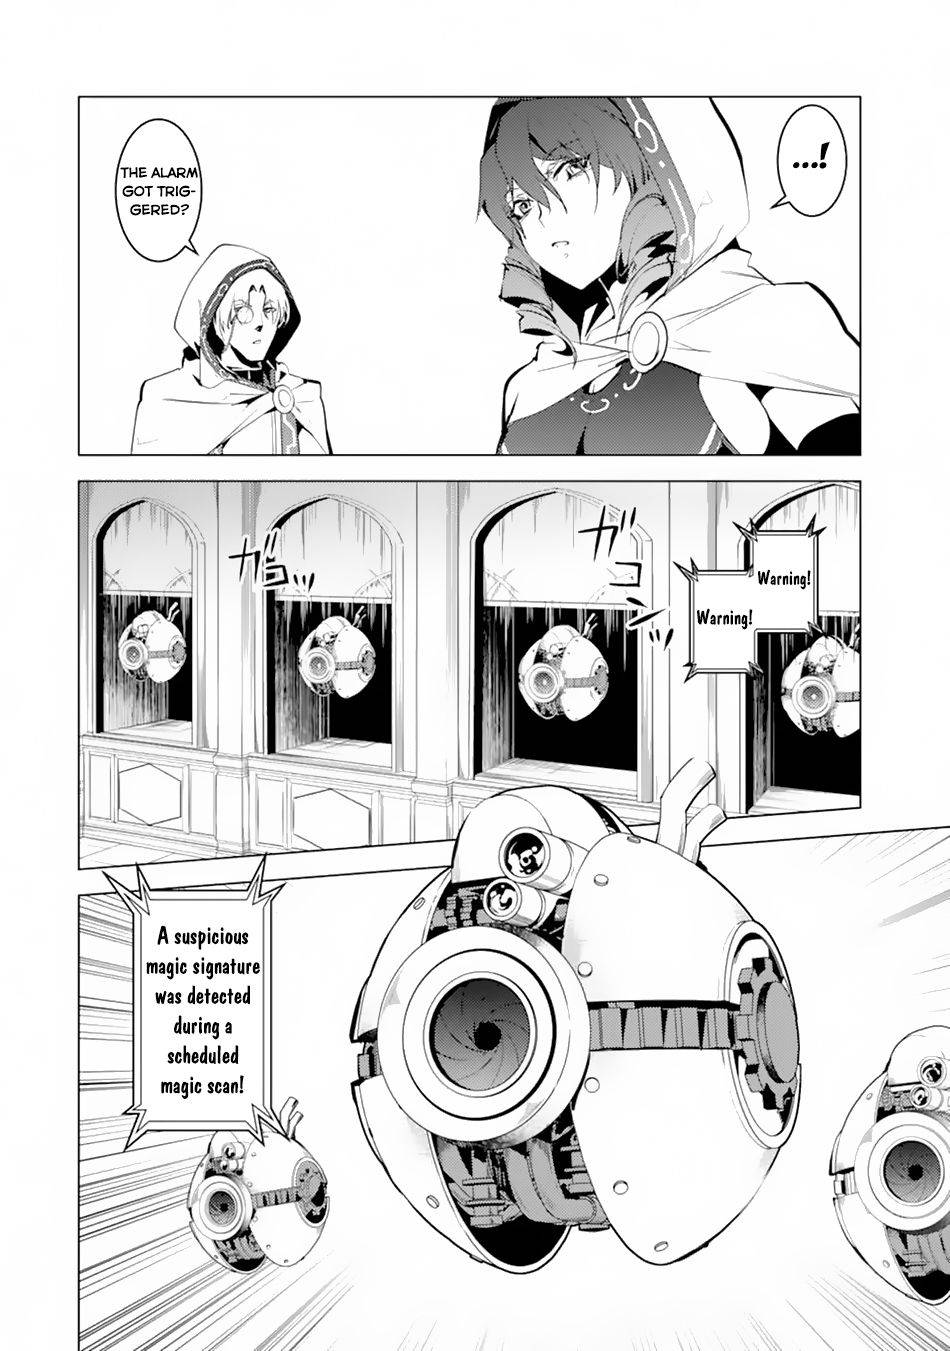 Manga Mogura RE on X: My Isekai Life: I Gained a Second Character Class &  Became the Strongest Sage in the World LN manga adaptation Vol.19 by  Shinkou Shotou, Ponjea (Friendly Land)